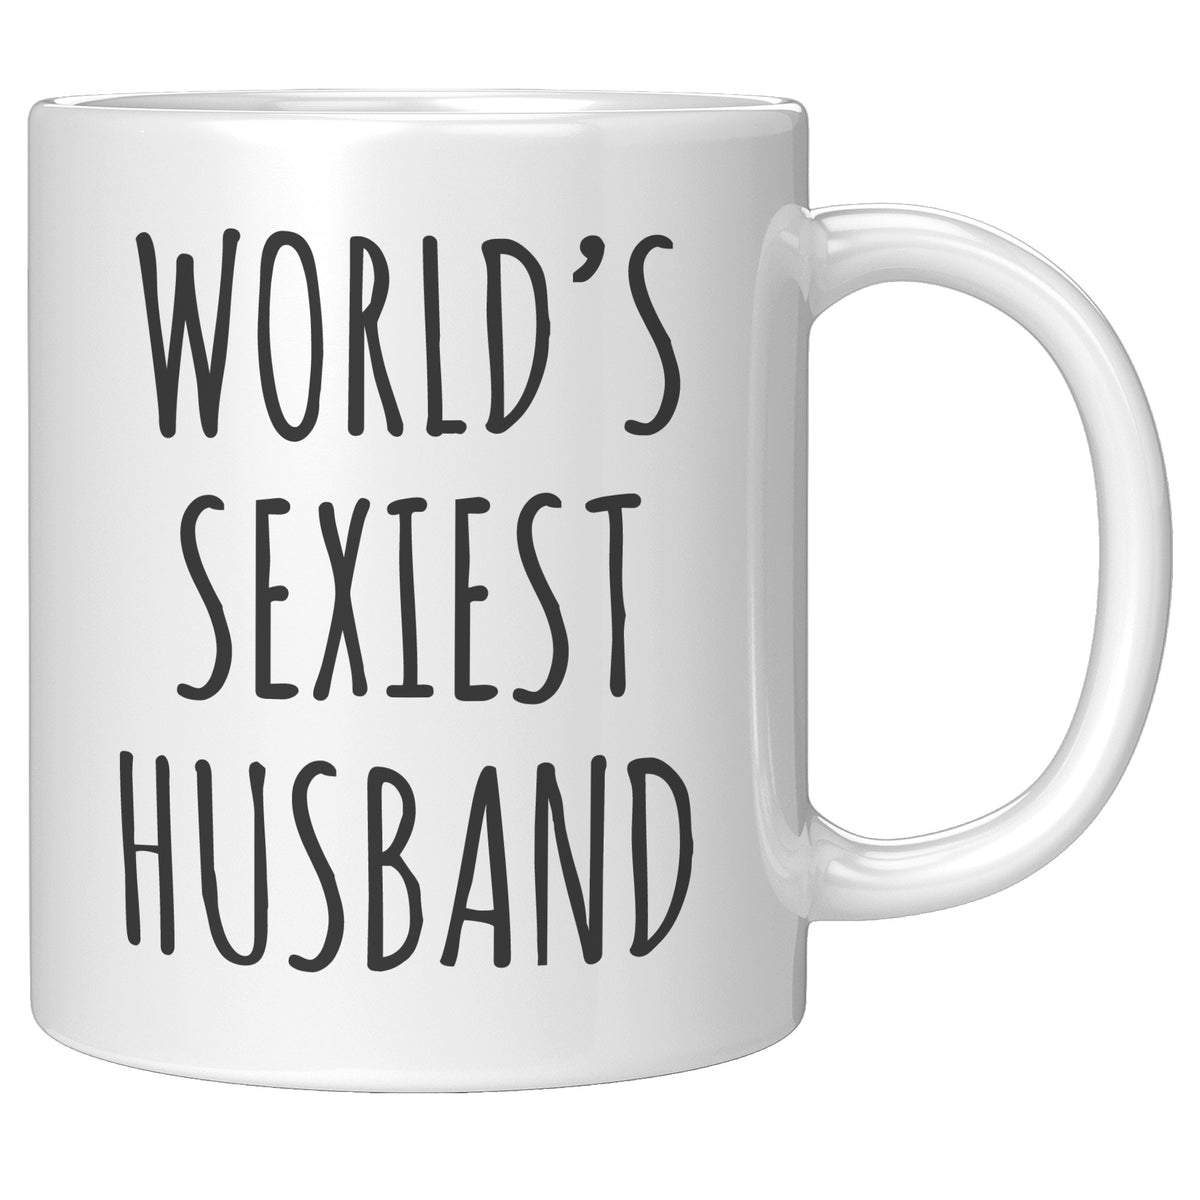 Husband Mug - World's Sexiest Husband